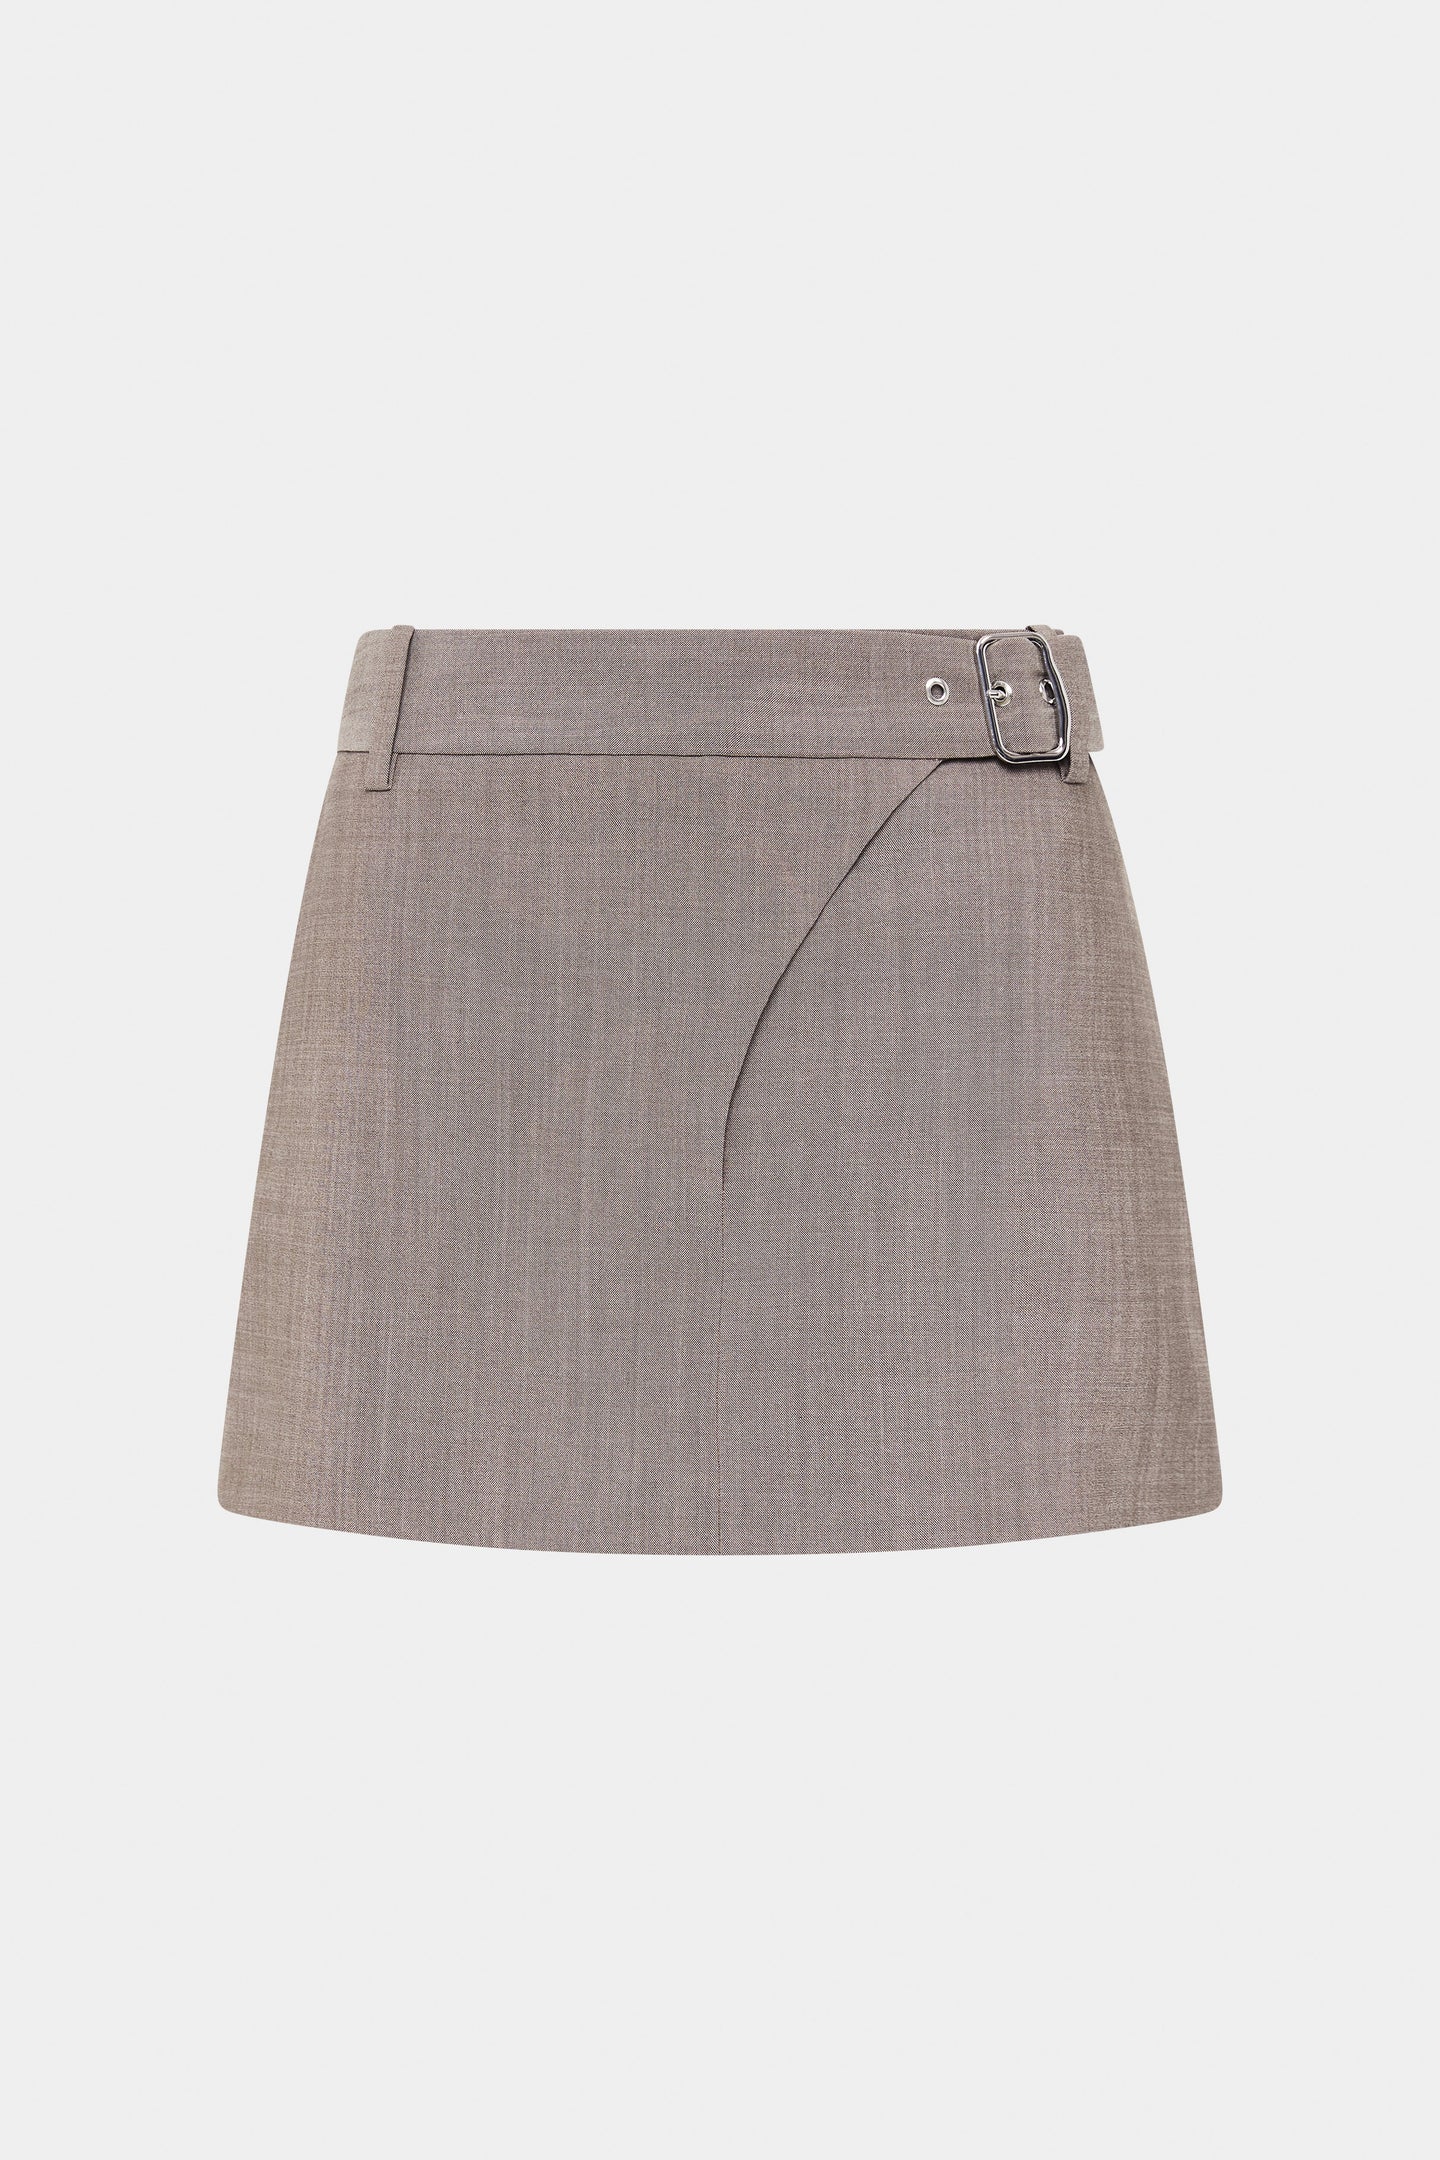 SIR the label Leonardo Belted Mini Skirt TAUPE